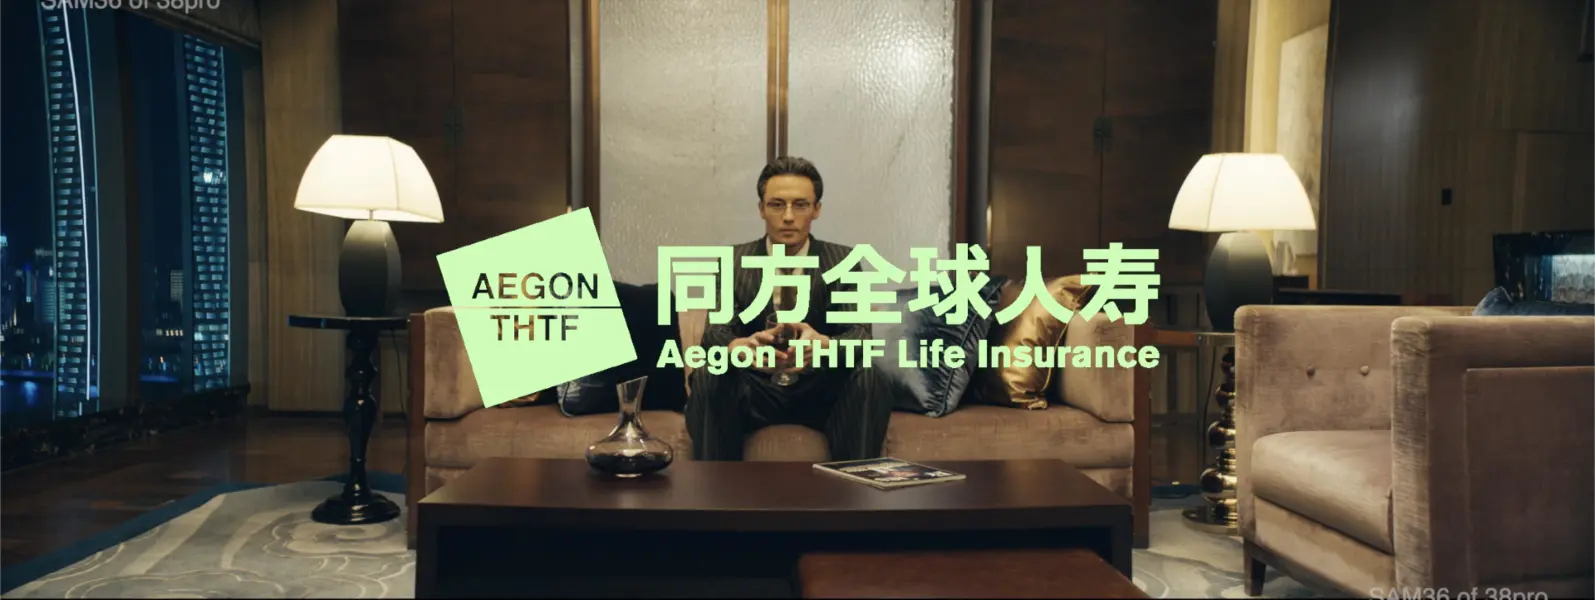 Aegon THTF Life Insurance -Secret of life